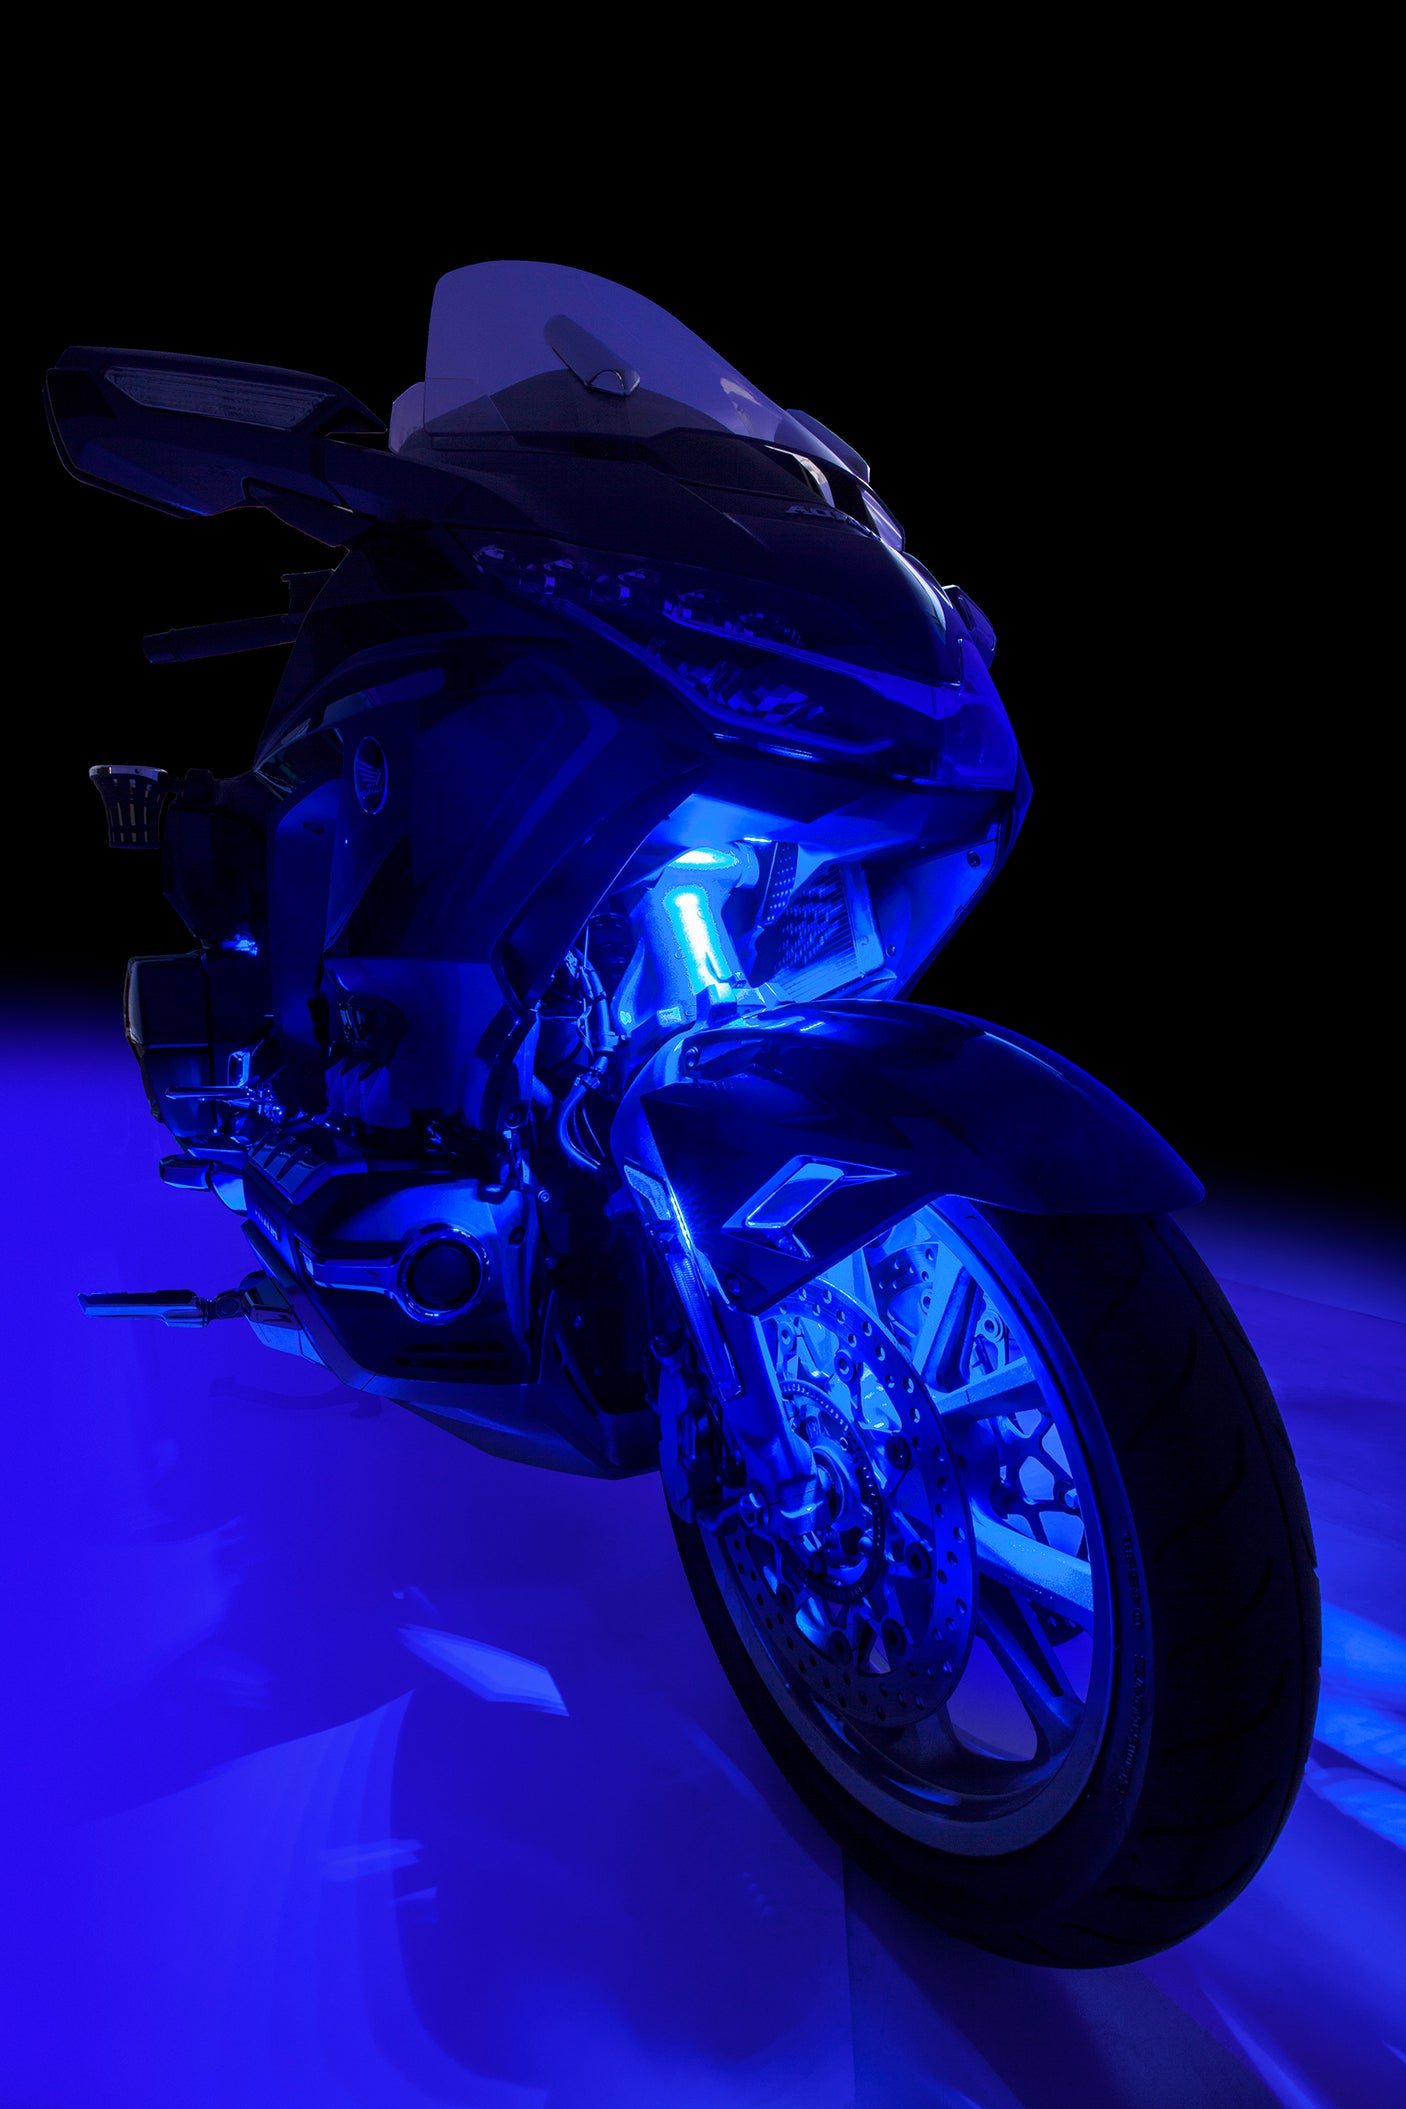 Advanced Million Color LED Motorcycle Lighting Kit